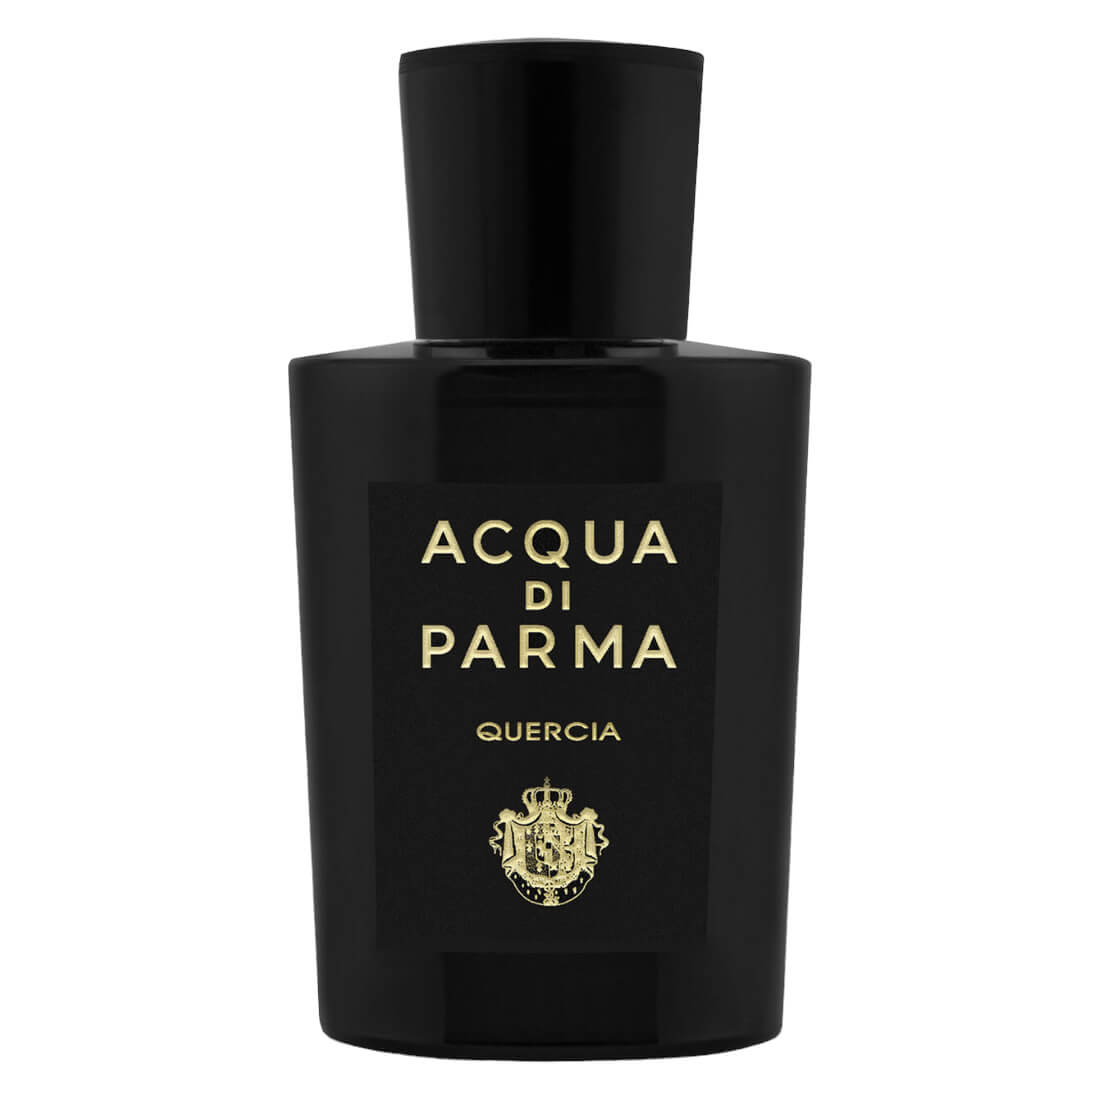 цена Парфюмерная вода Acqua di Parma Signatures Of The Sun Quercia, 100 мл